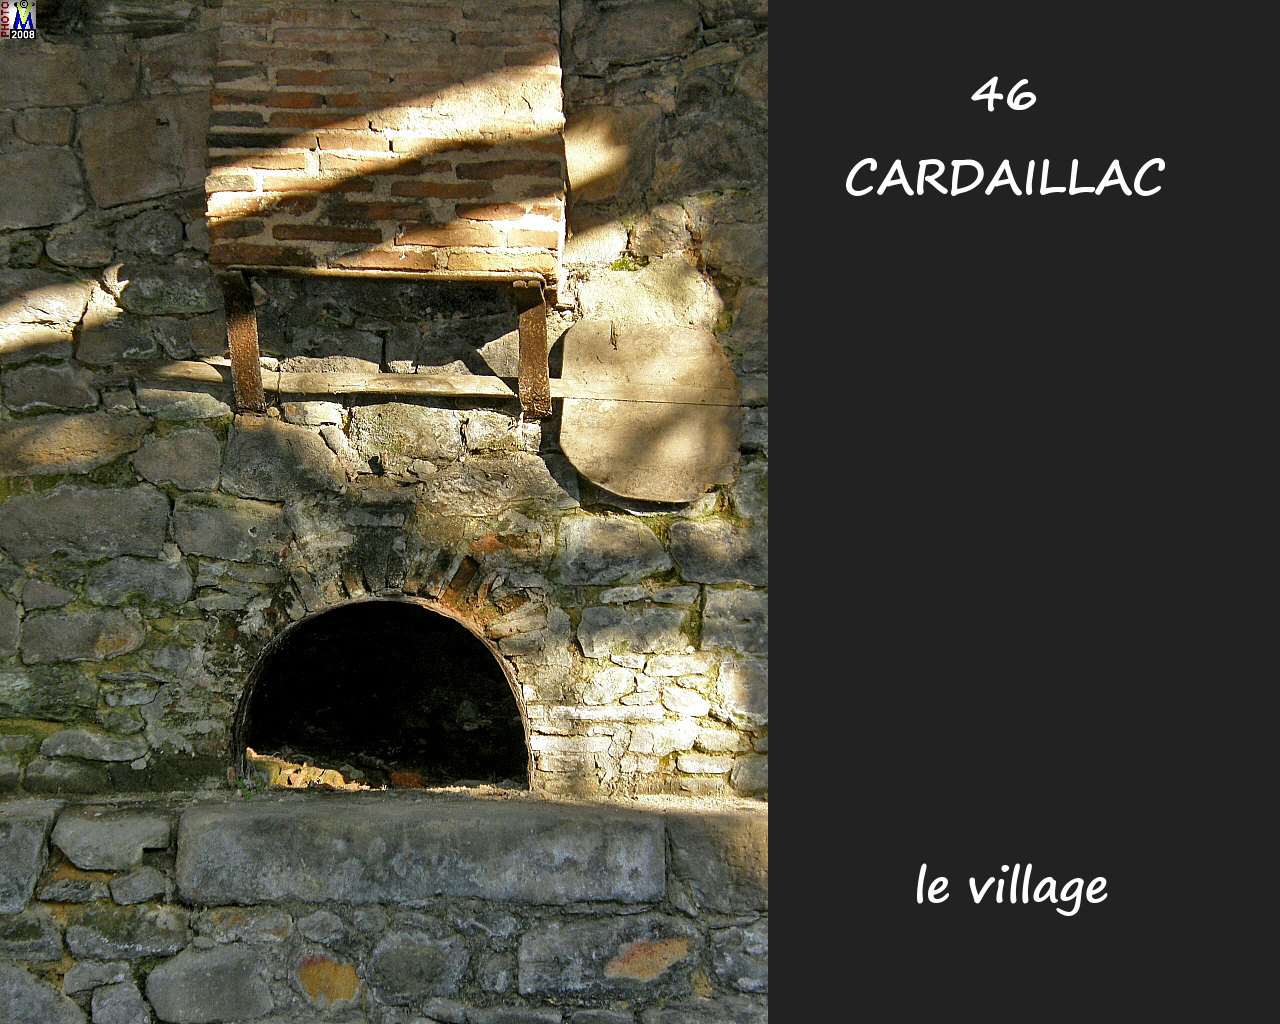 46CARDAILLAC_village_146.jpg